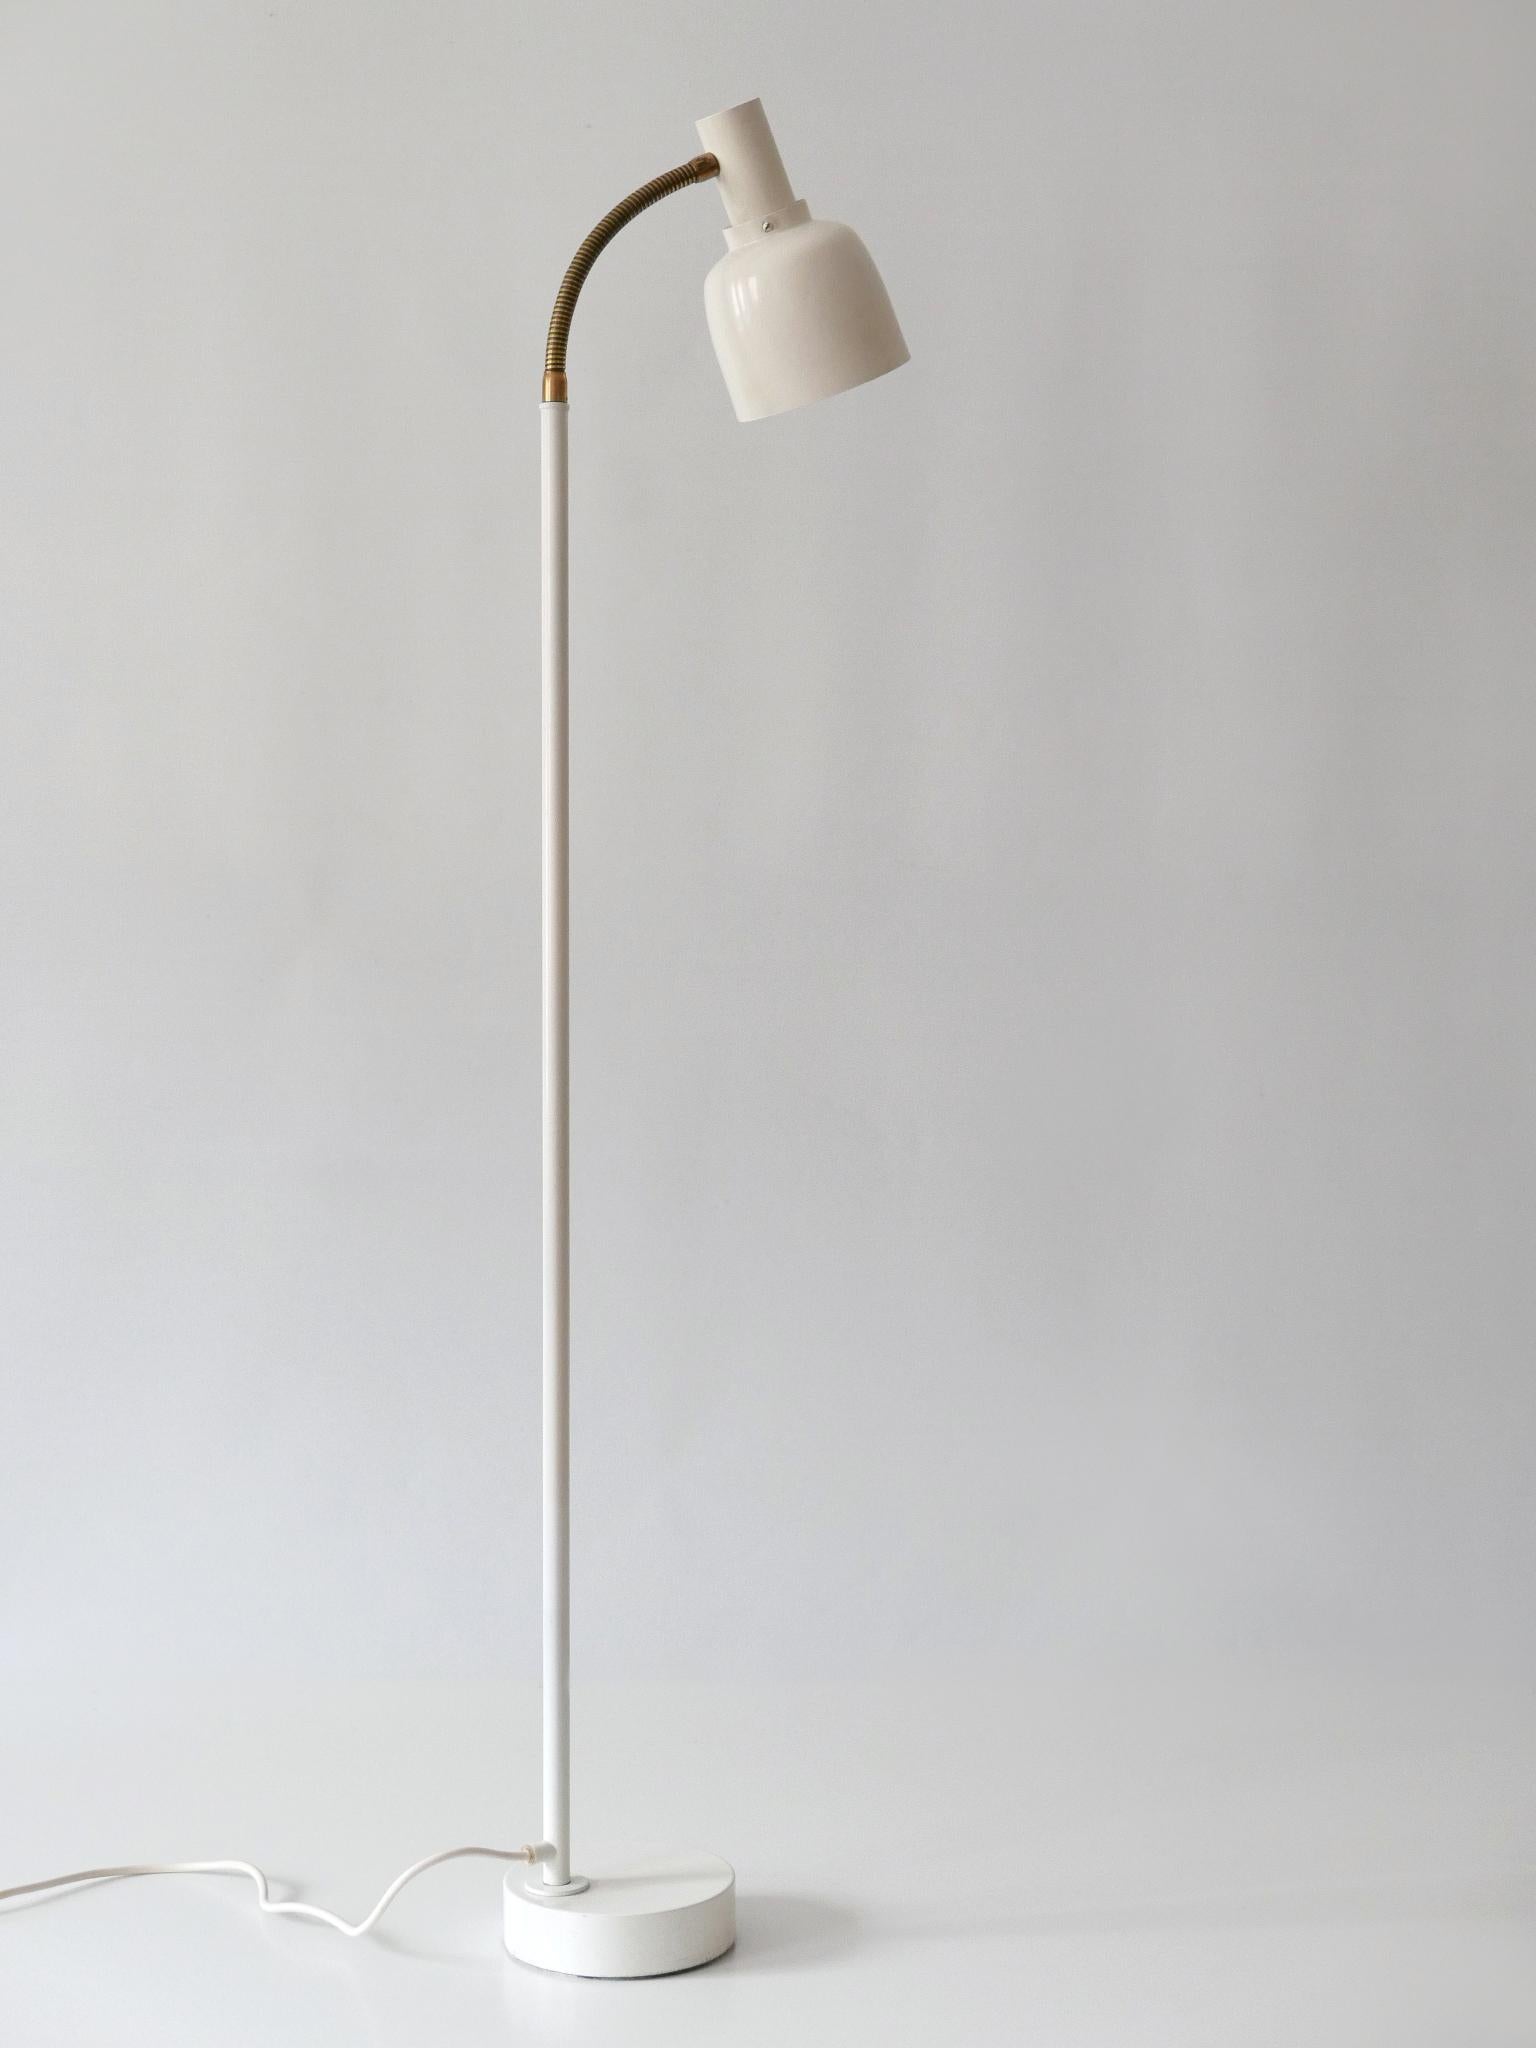 Metal Rare Mid-Century Modern Floor Lamp or Reading Light by Hans-Agne Jakobsson 1960s For Sale